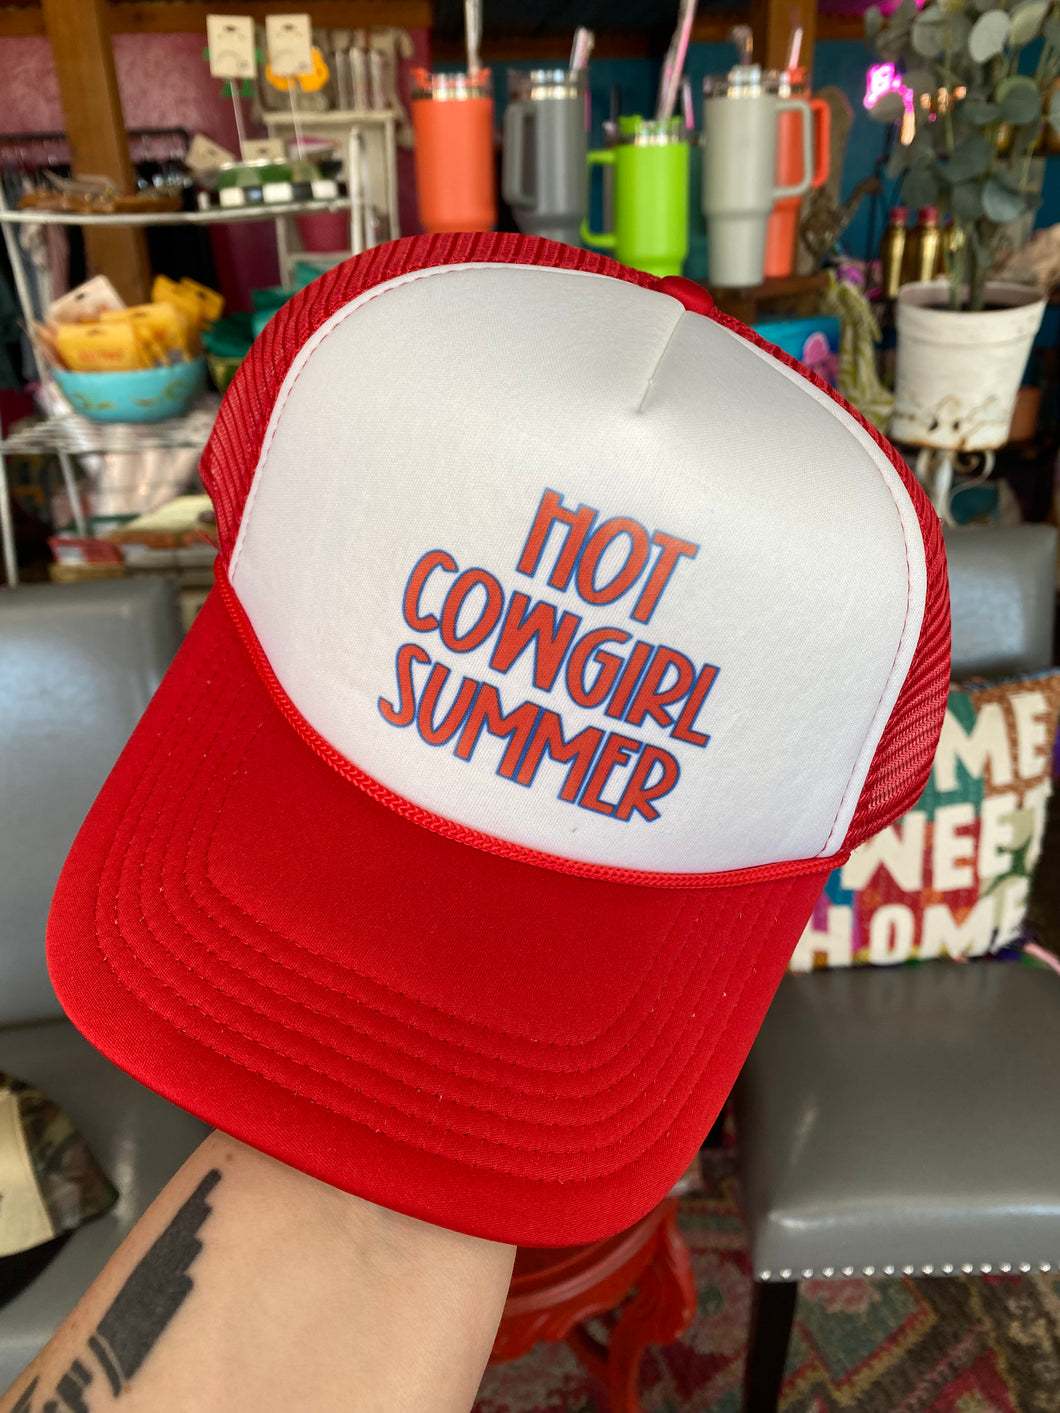 Hot Cowgirl Summer Trucker Hat